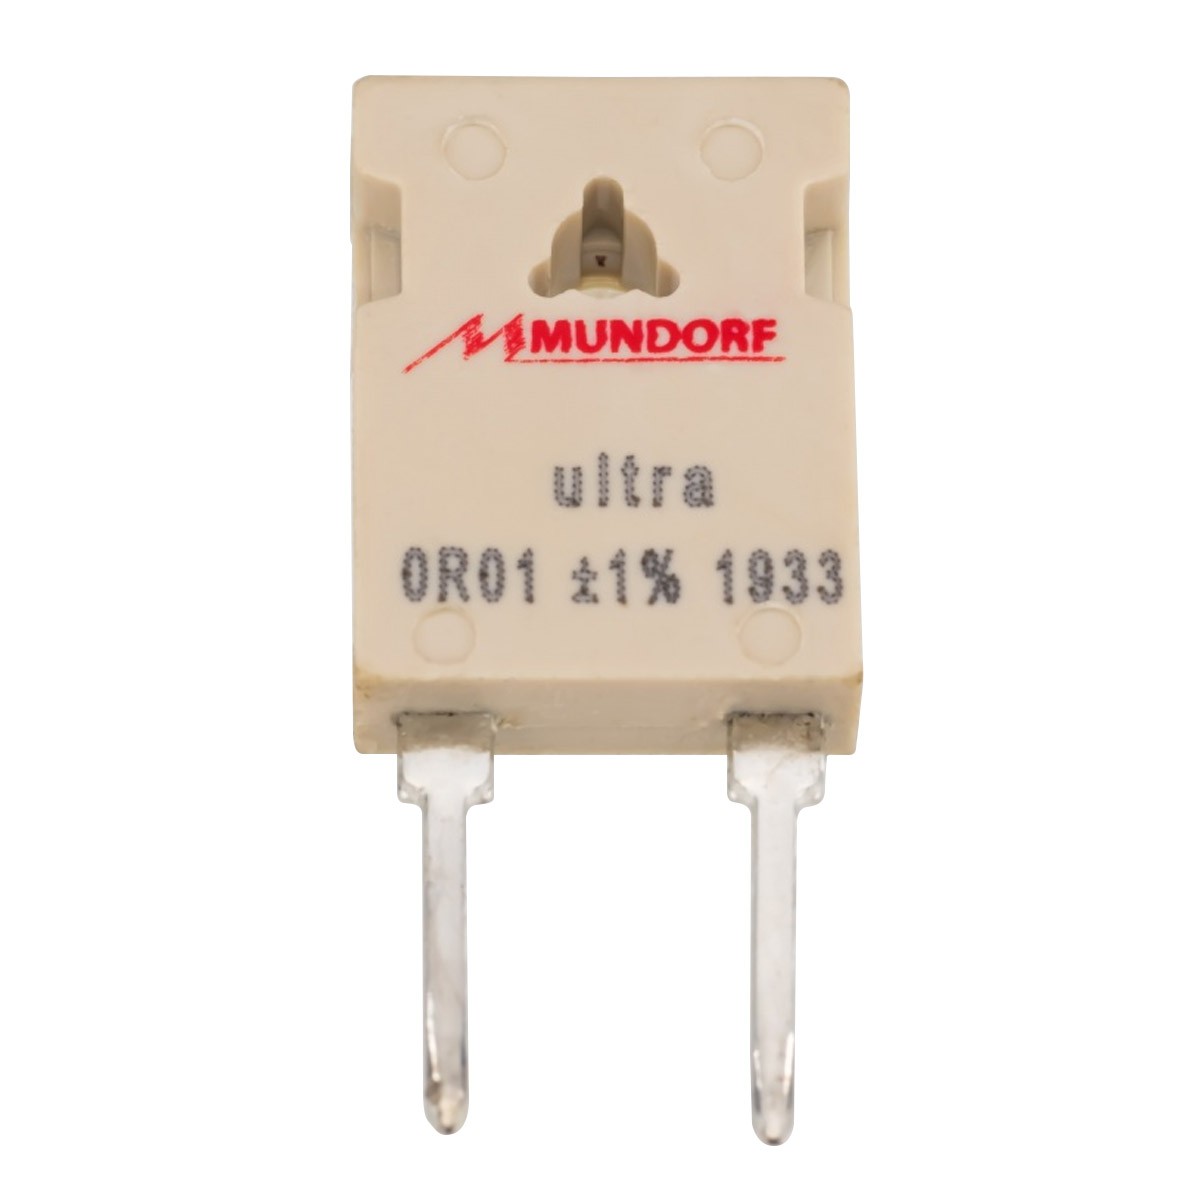 MUNDORF MRESIST ULTRA Resistor 30W 0.39 Ohm